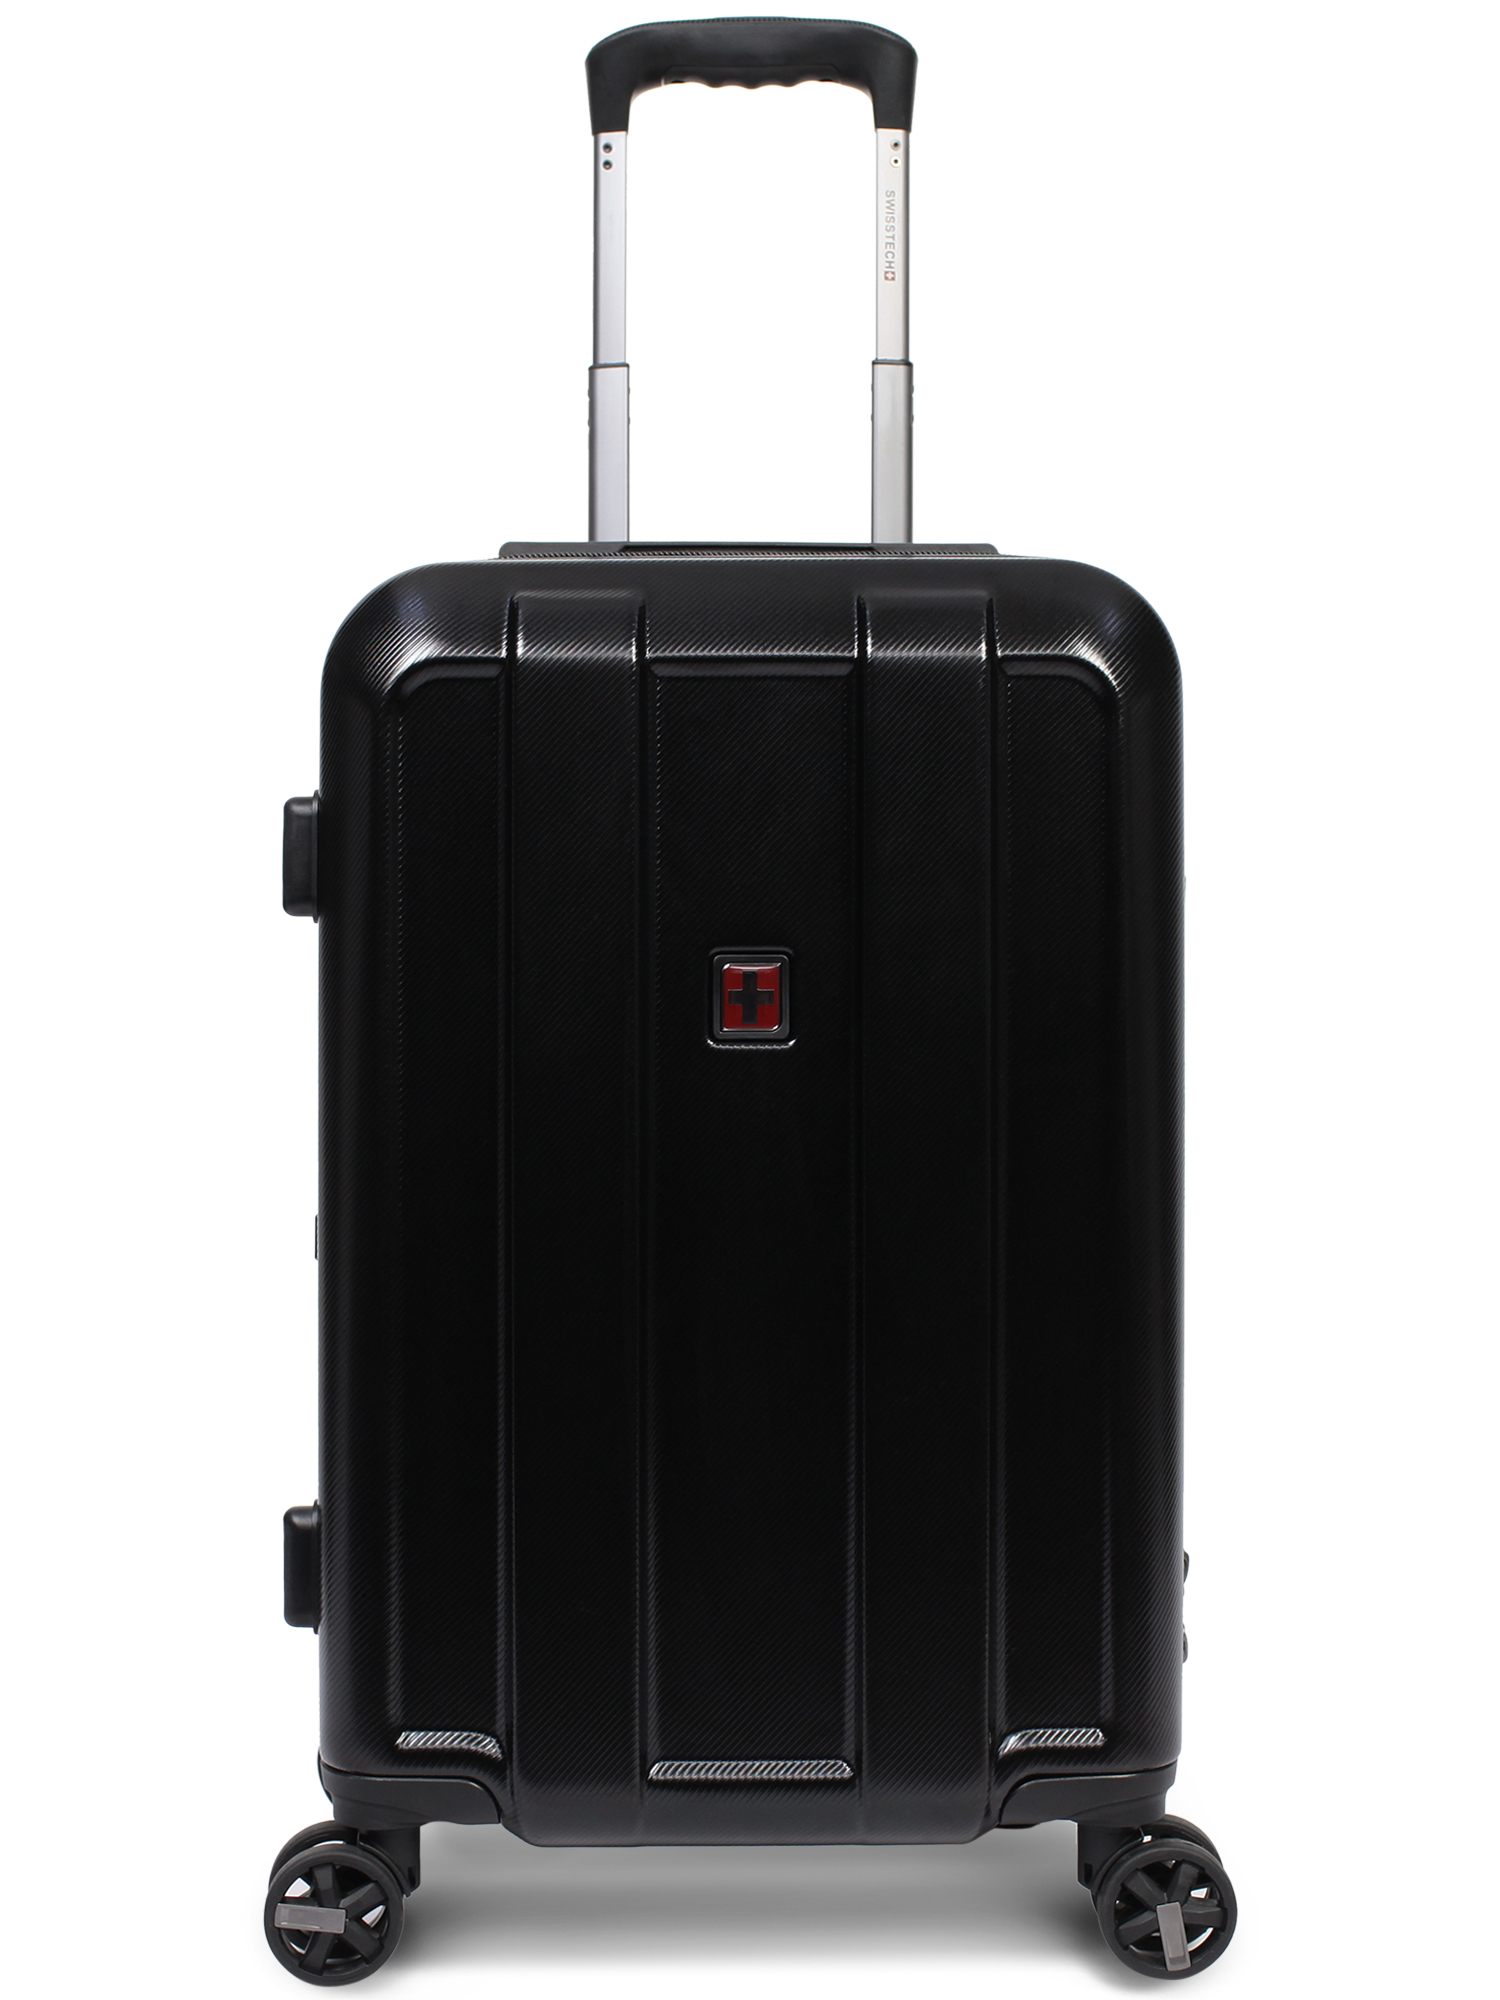 SwissTech 2 Piece Luggage Set, 29" Executive and Navigation 21", Black - image 4 of 15